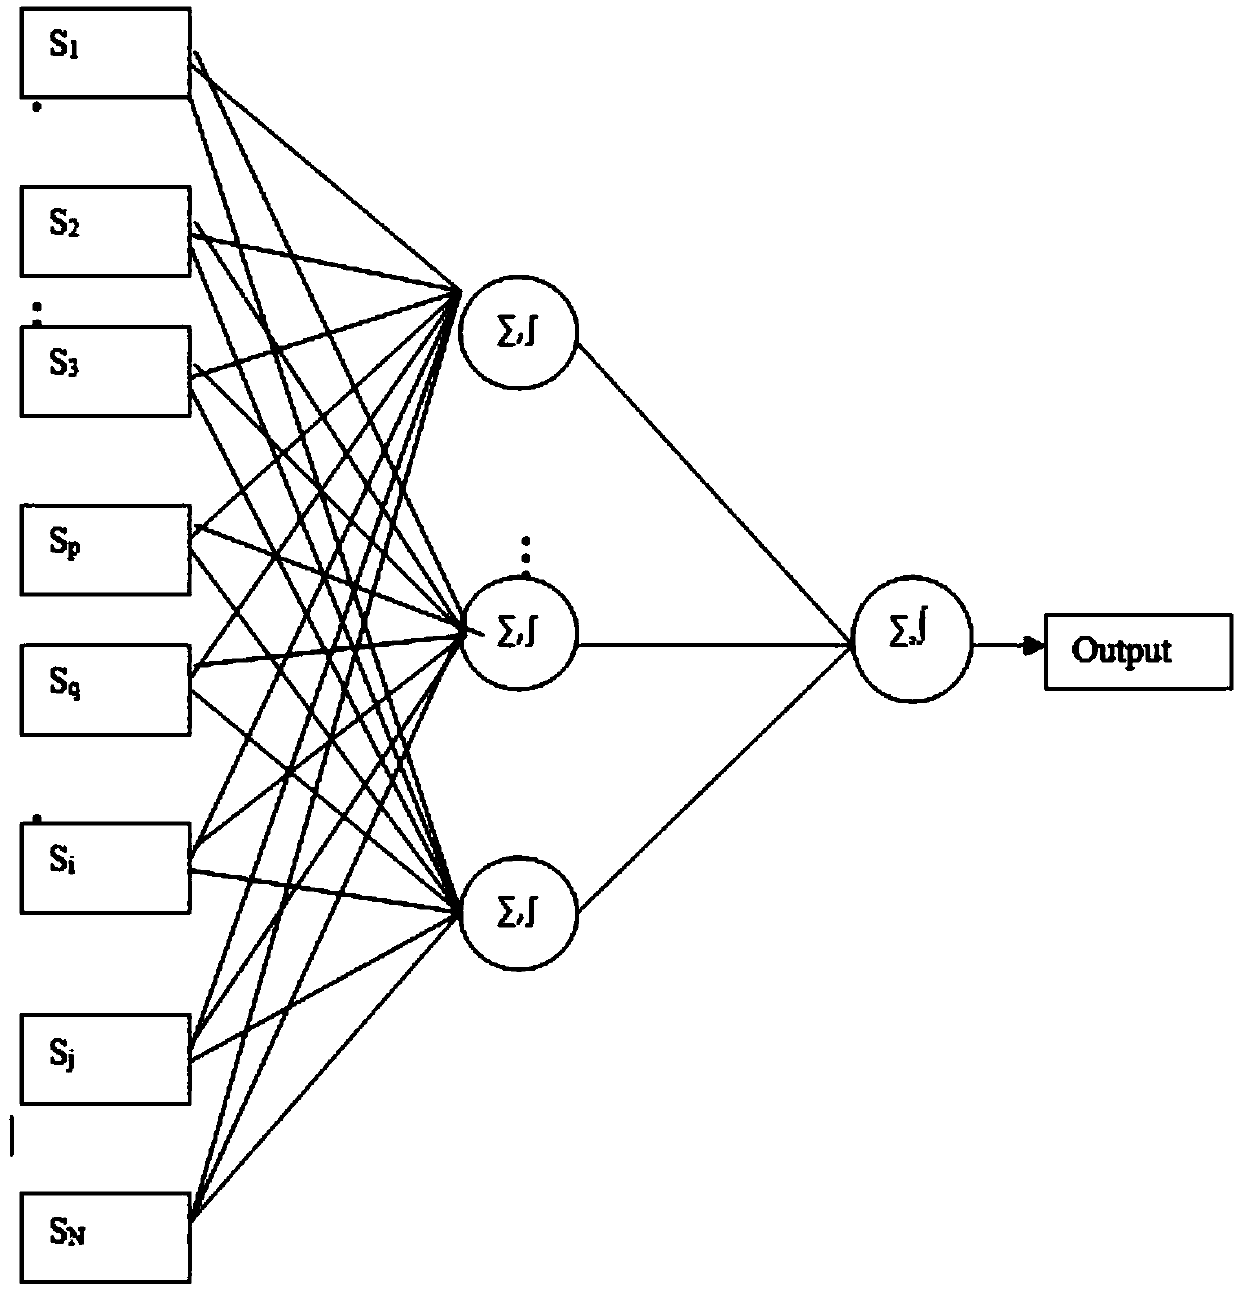 Neural network model-based optical proximity correction method